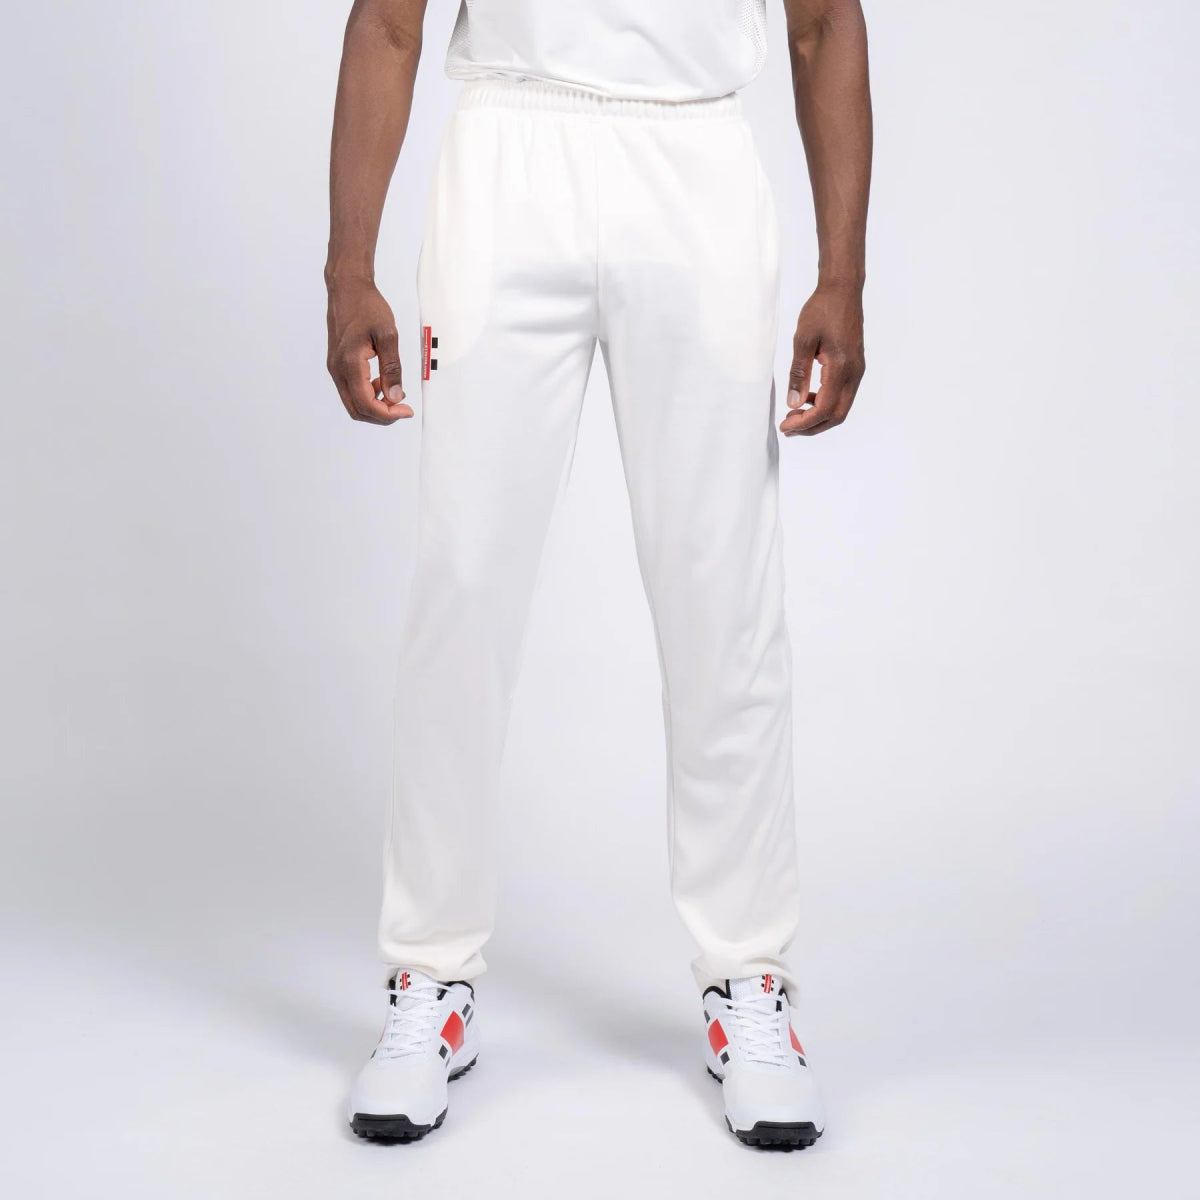 Gray Nicolls Pro Performance Cricket Trouser - White